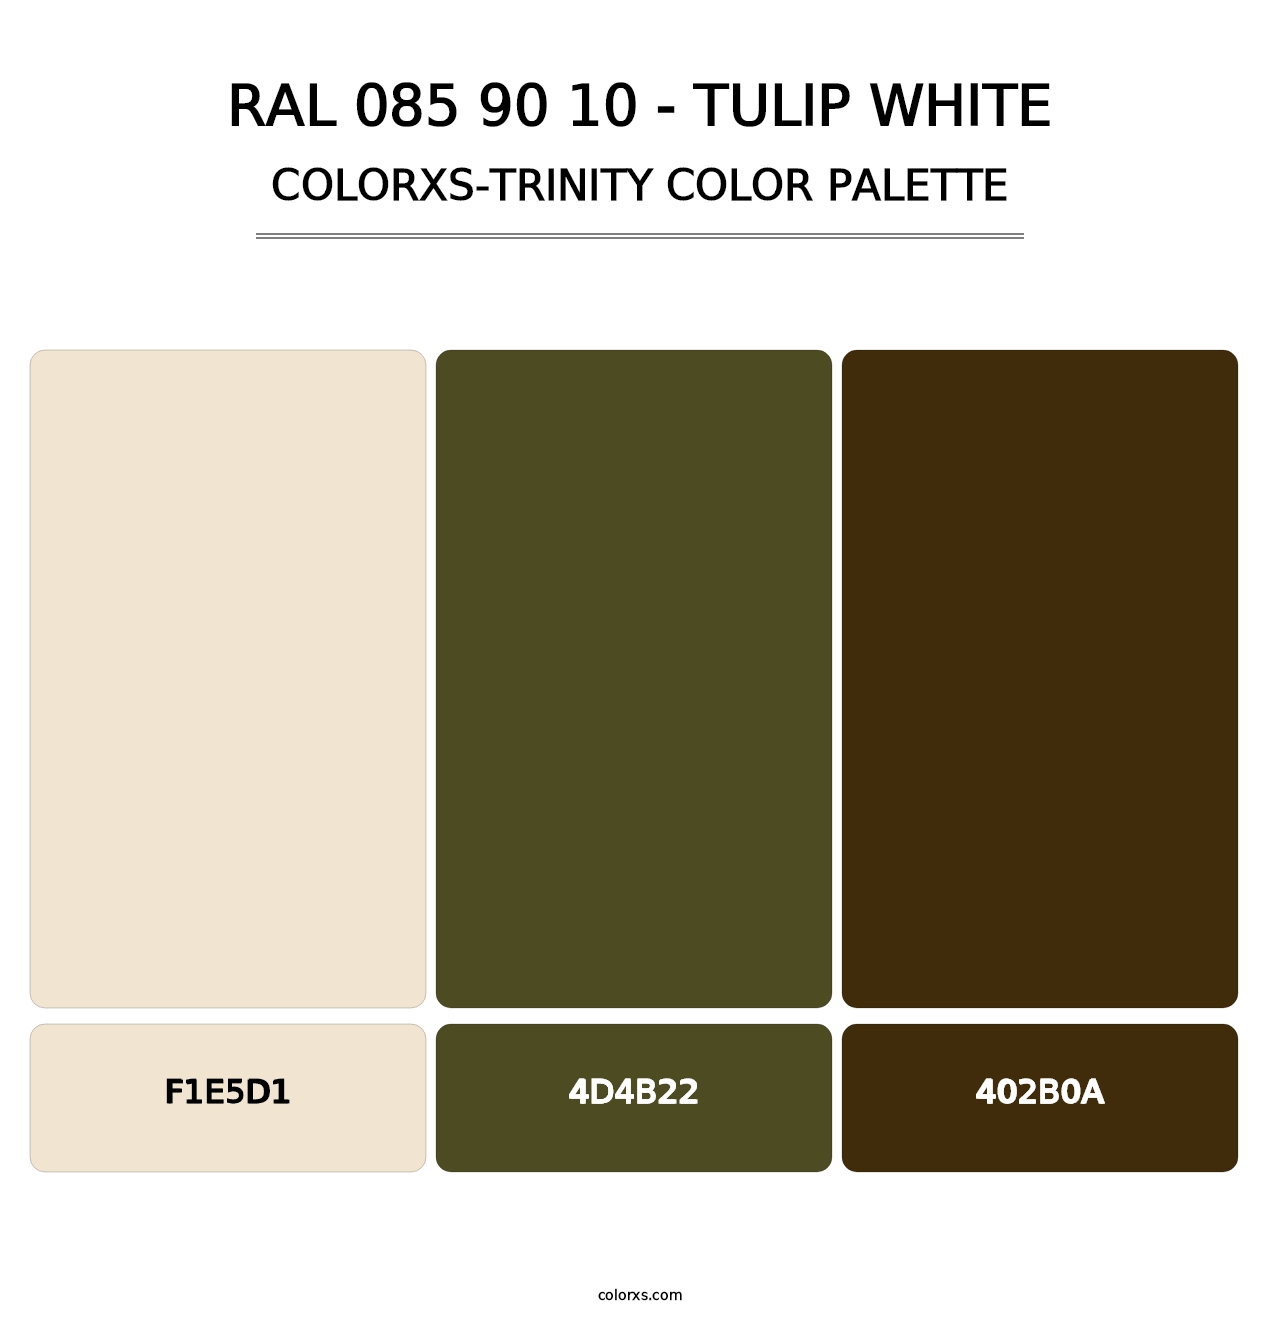 RAL 085 90 10 - Tulip White - Colorxs Trinity Palette